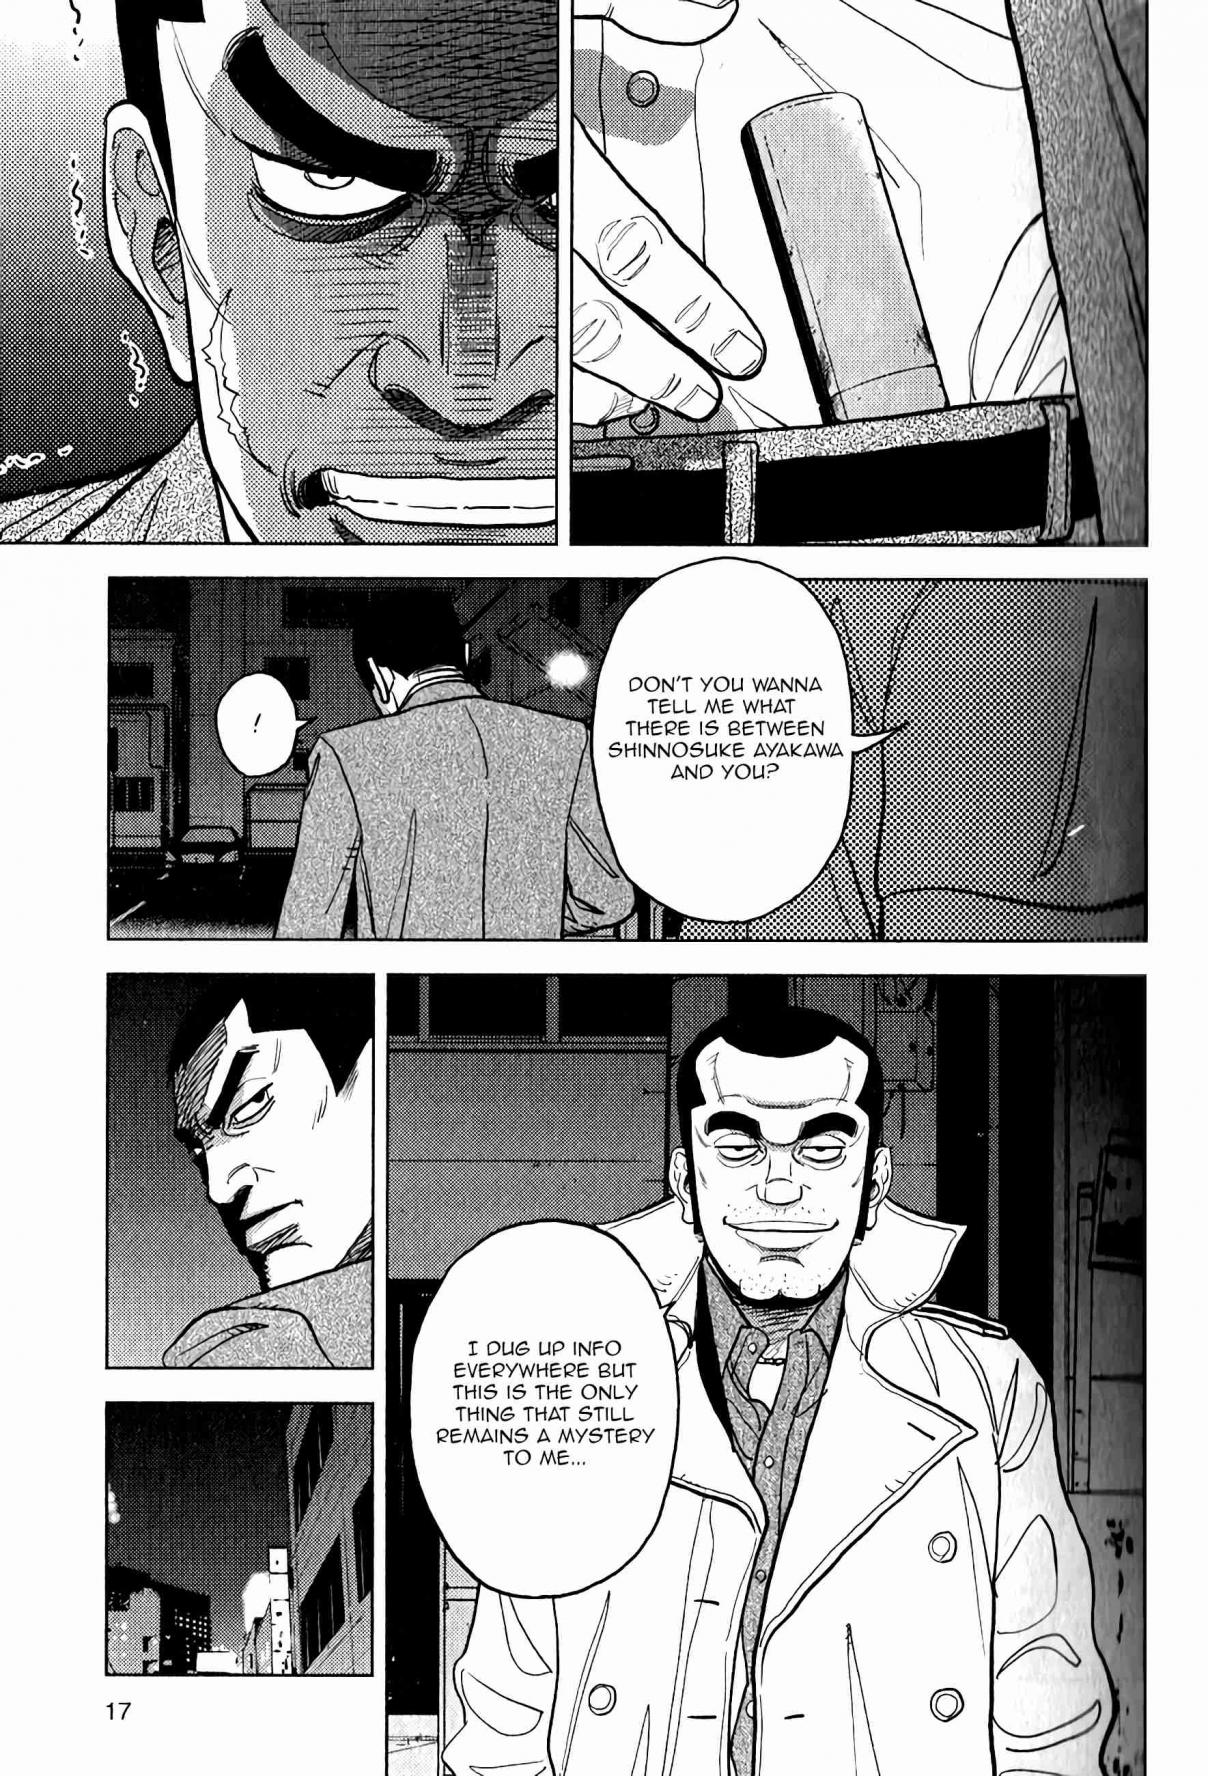 Inspector Kurokochi Vol. 2 Ch. 8 Black Coach